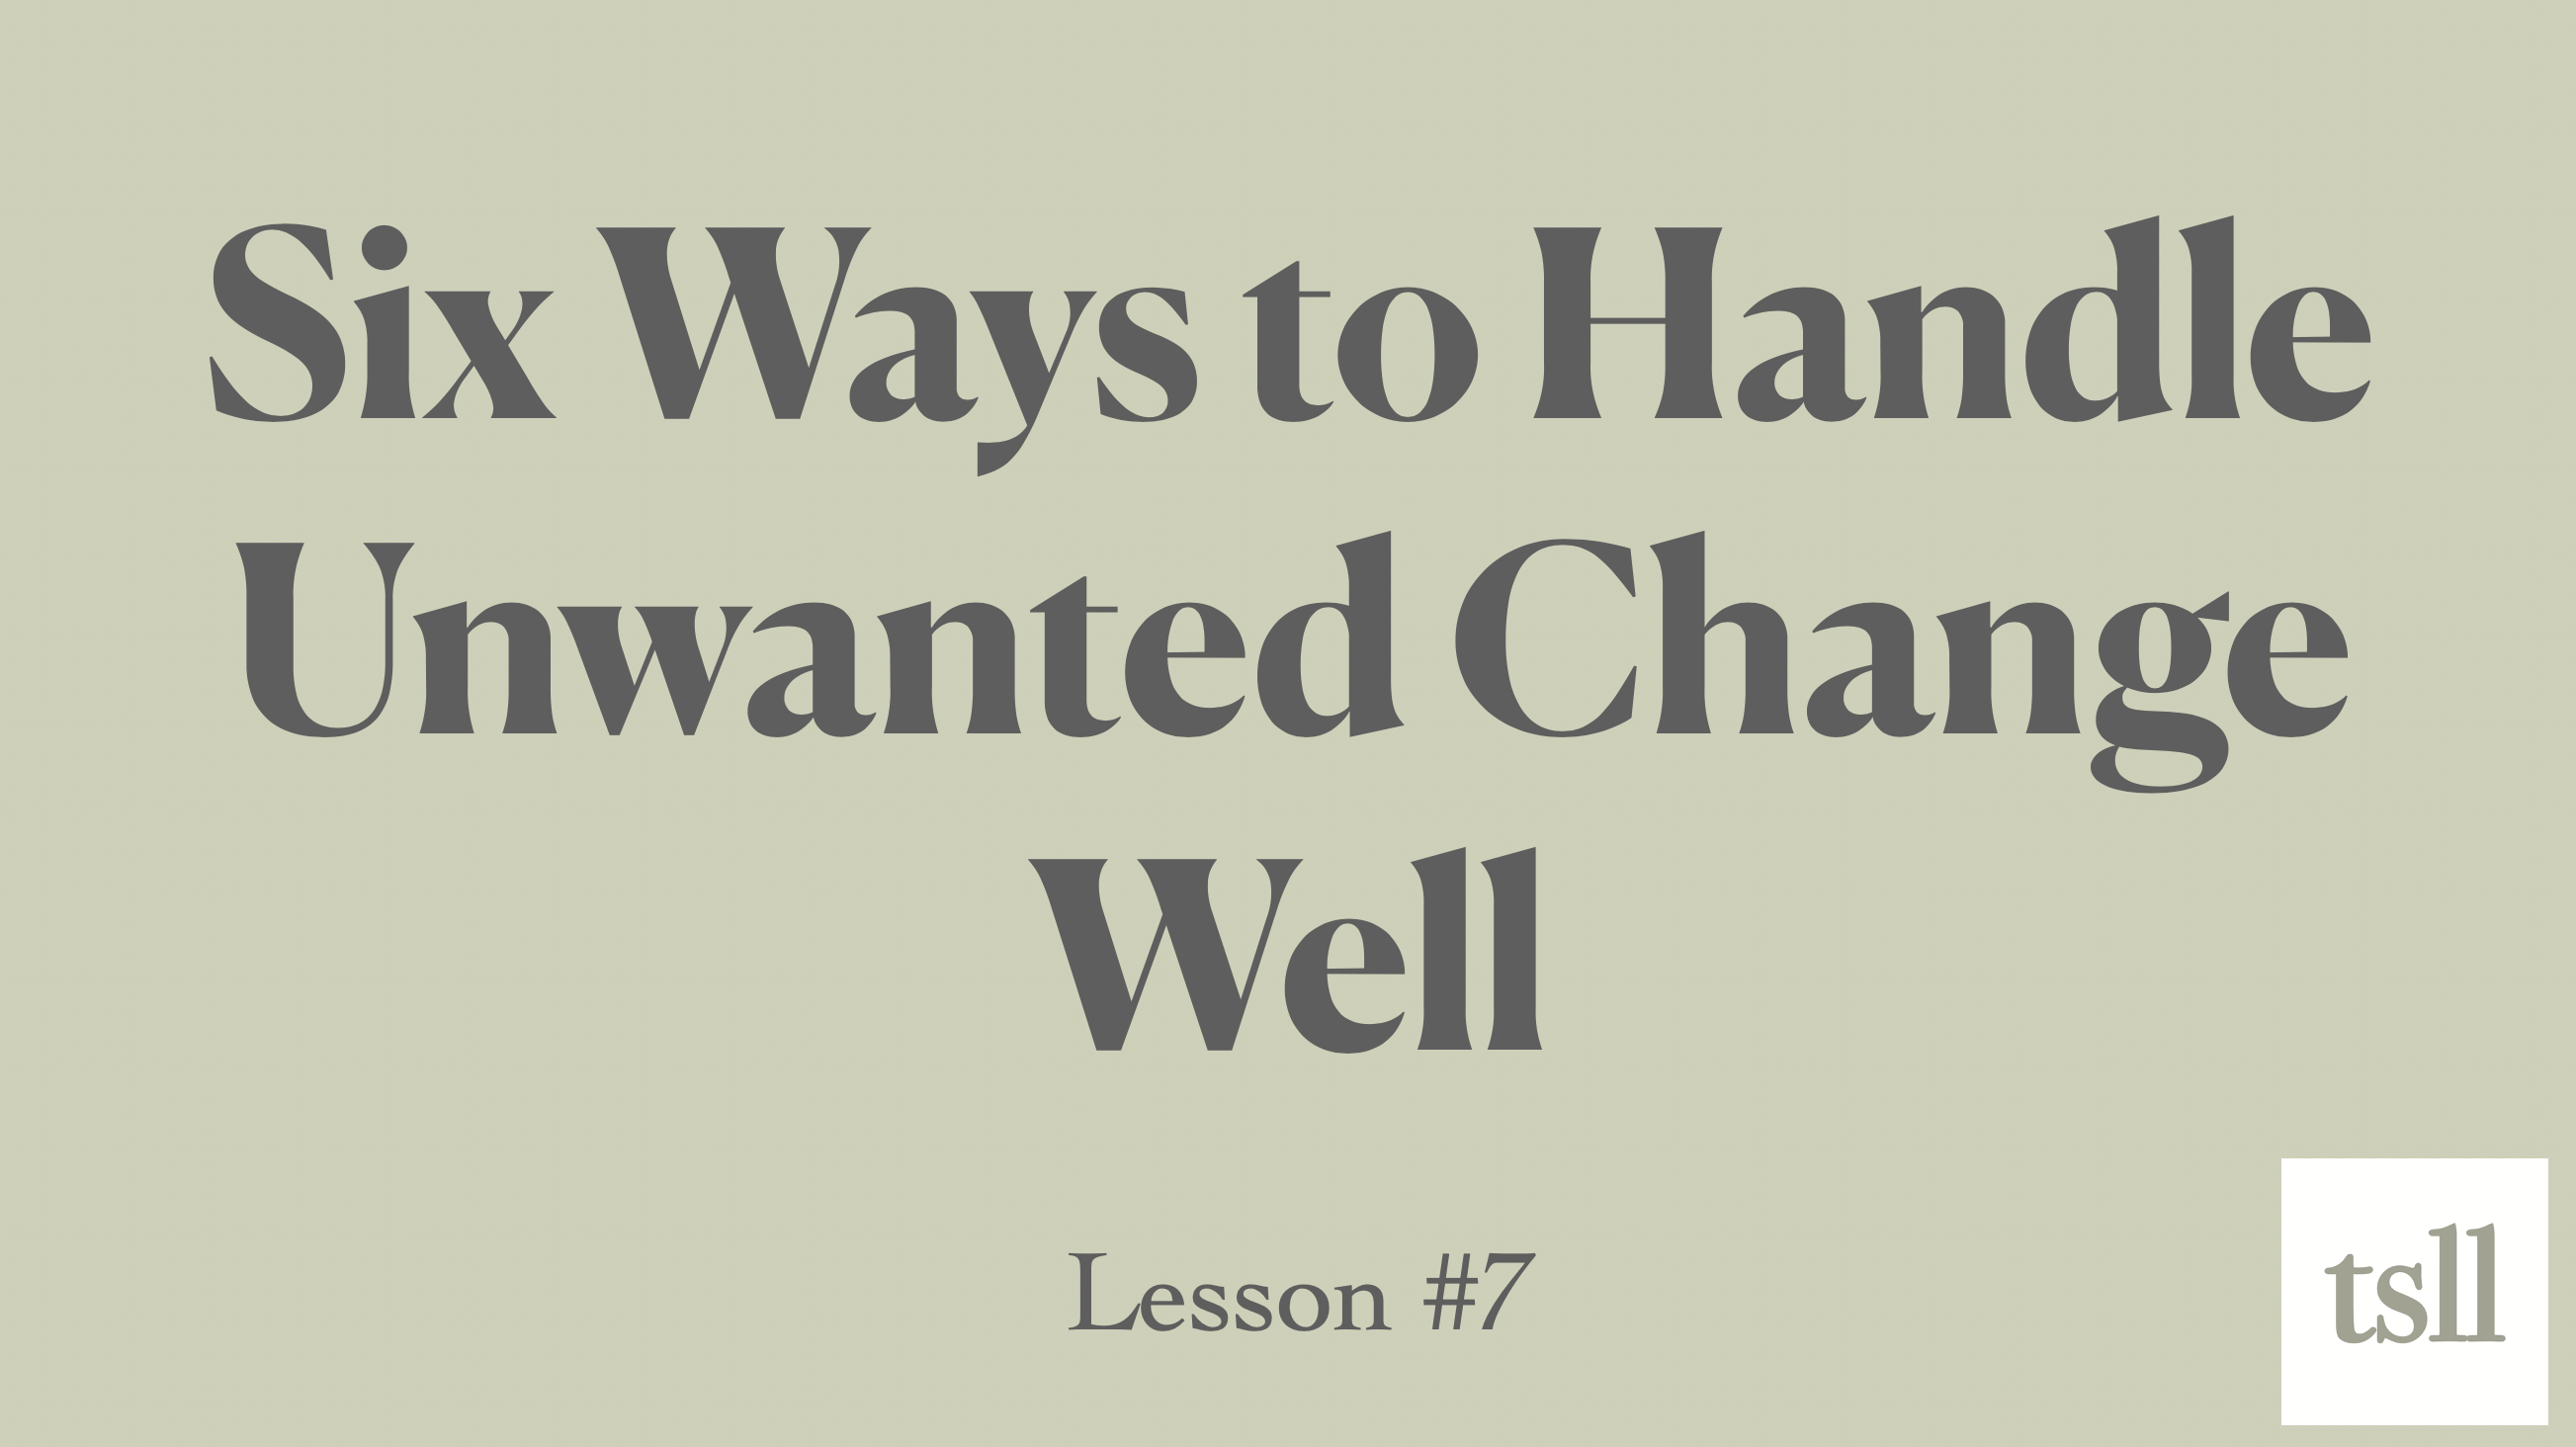 Part 2: Six Ways to Handle Unwanted Change Well (10:52)